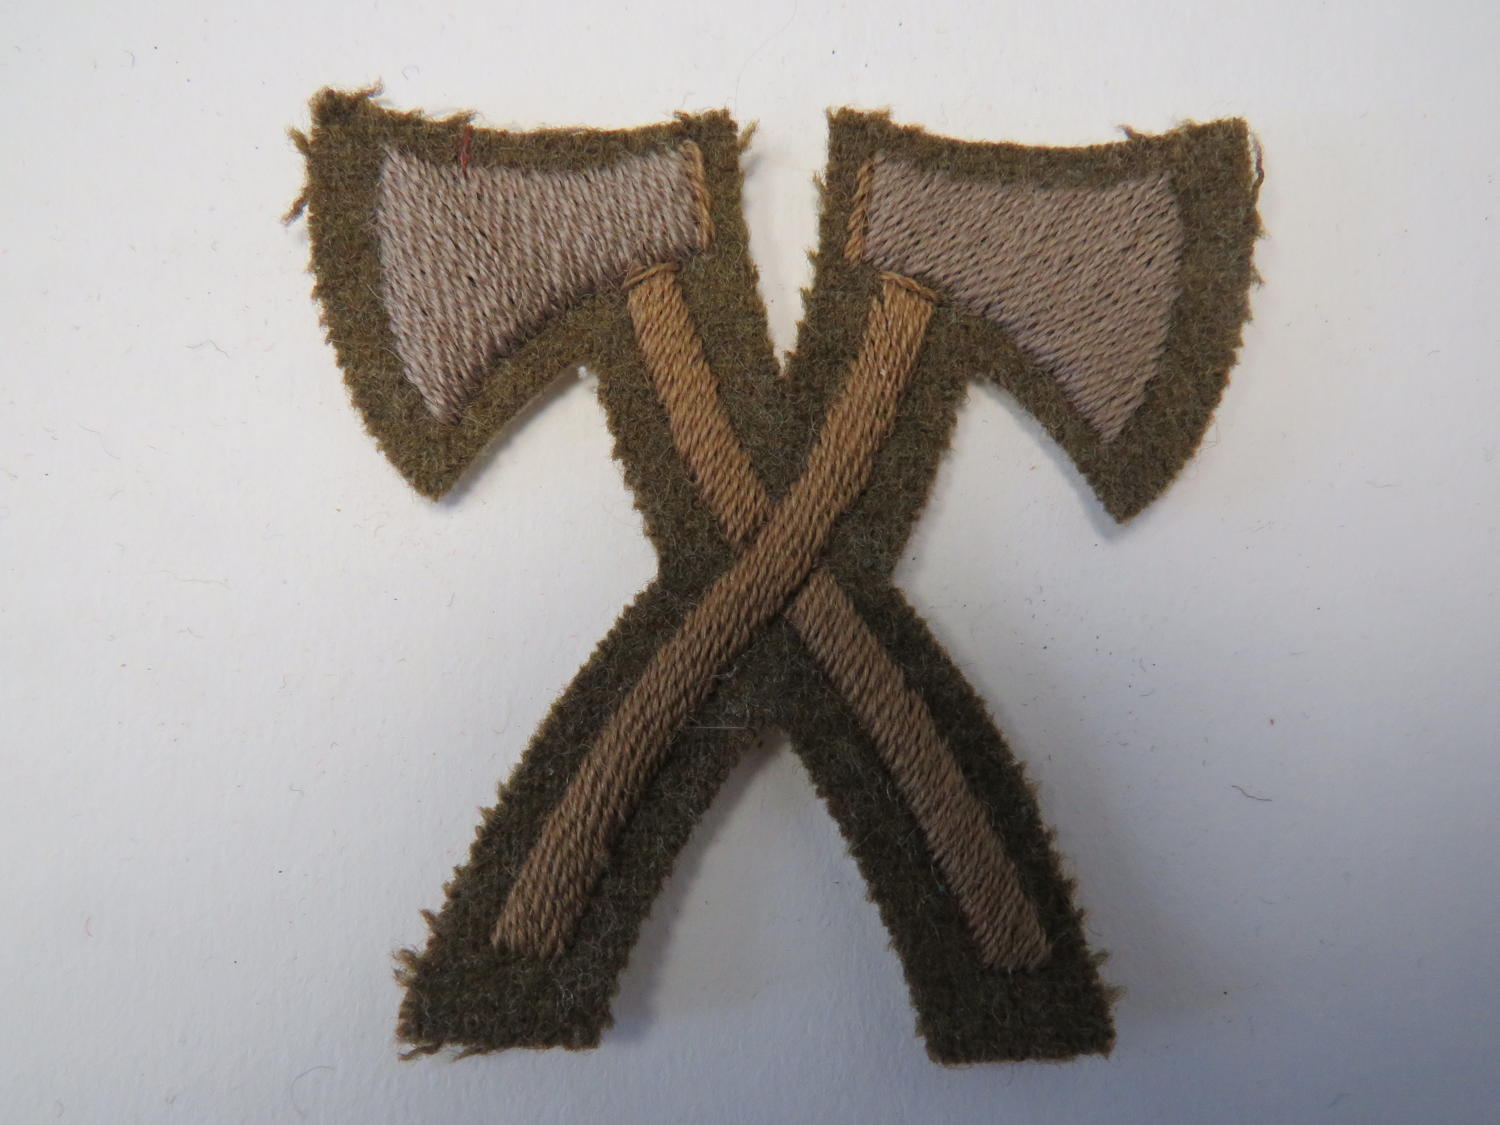 Pioneer Trade Arm Badge